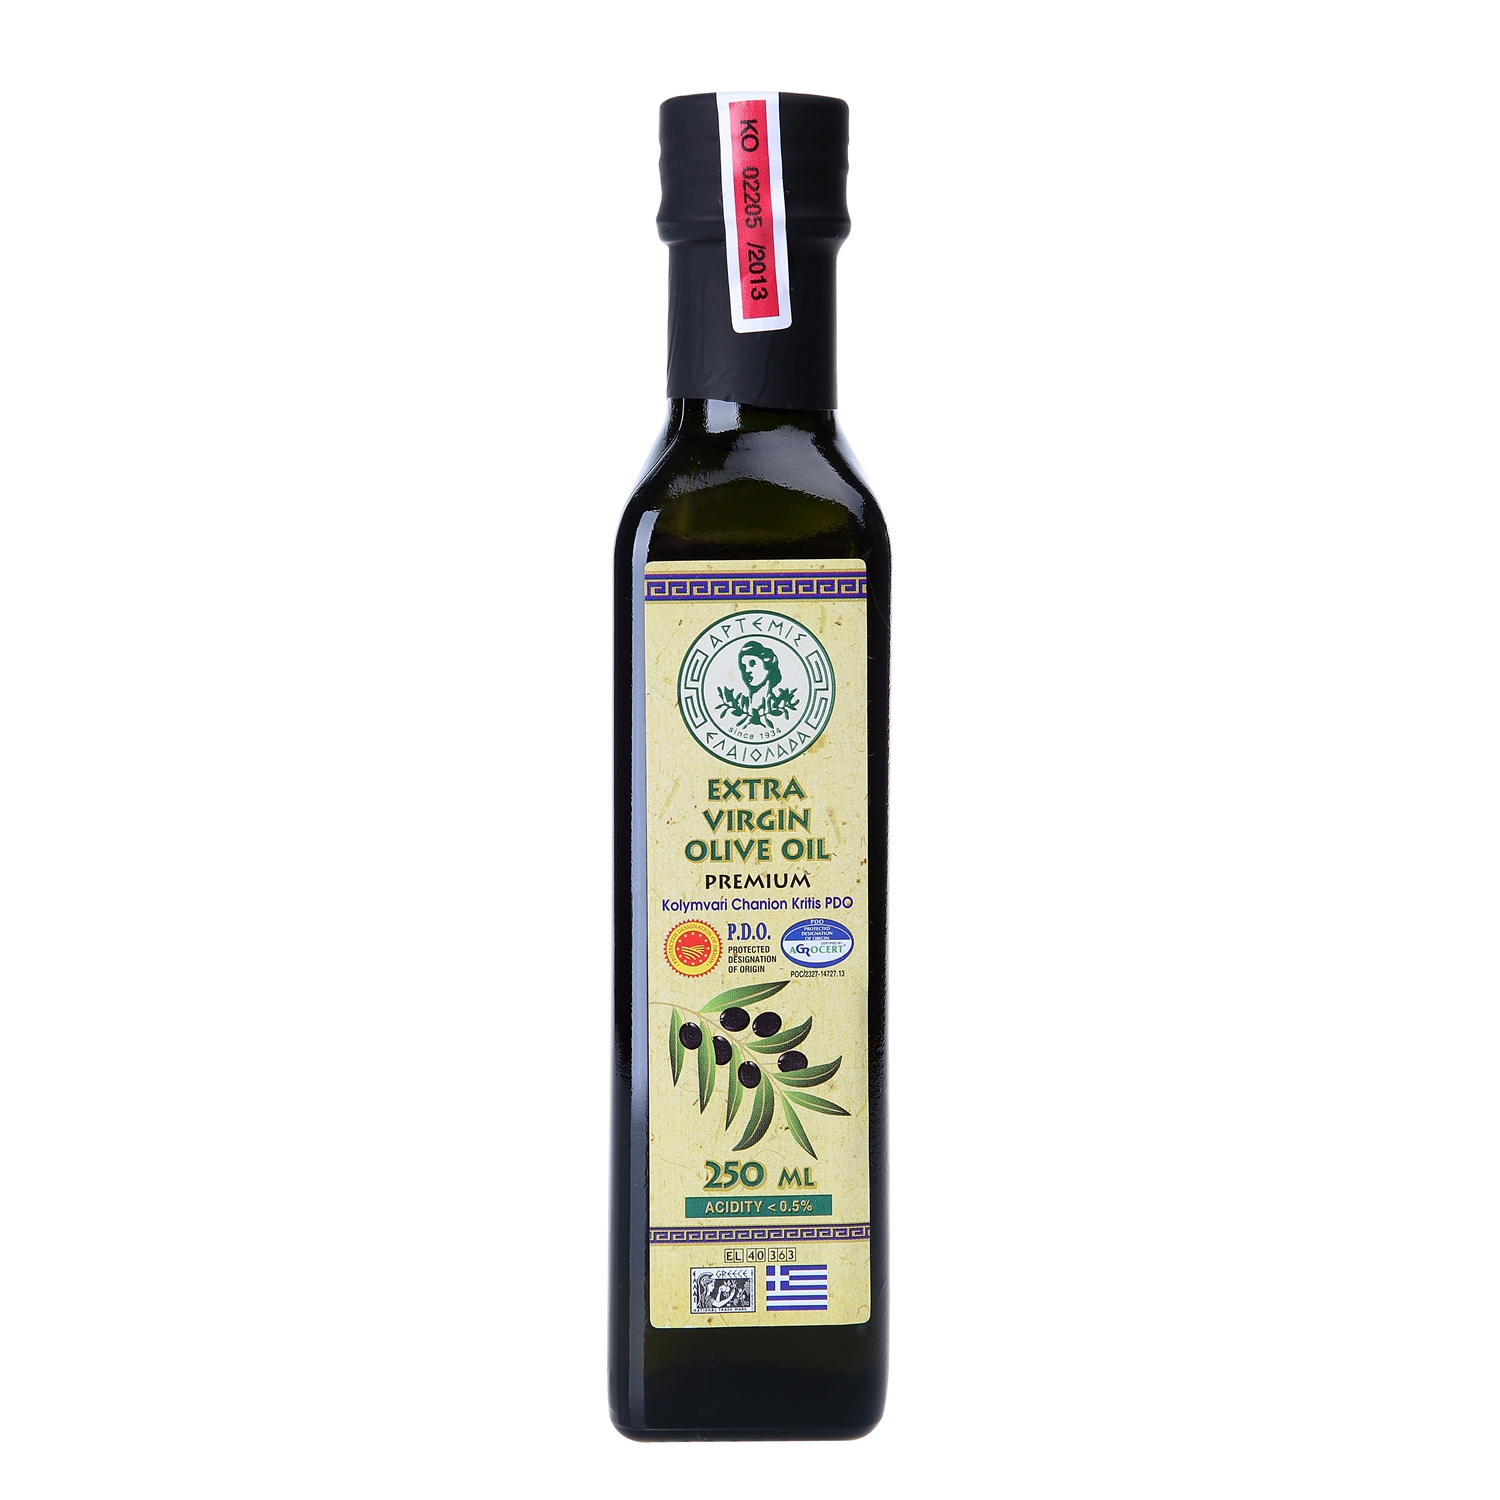 ARTEMIS 阿蒂米斯 P.D.O系列 希腊原装进口特级初榨橄榄油 250ML